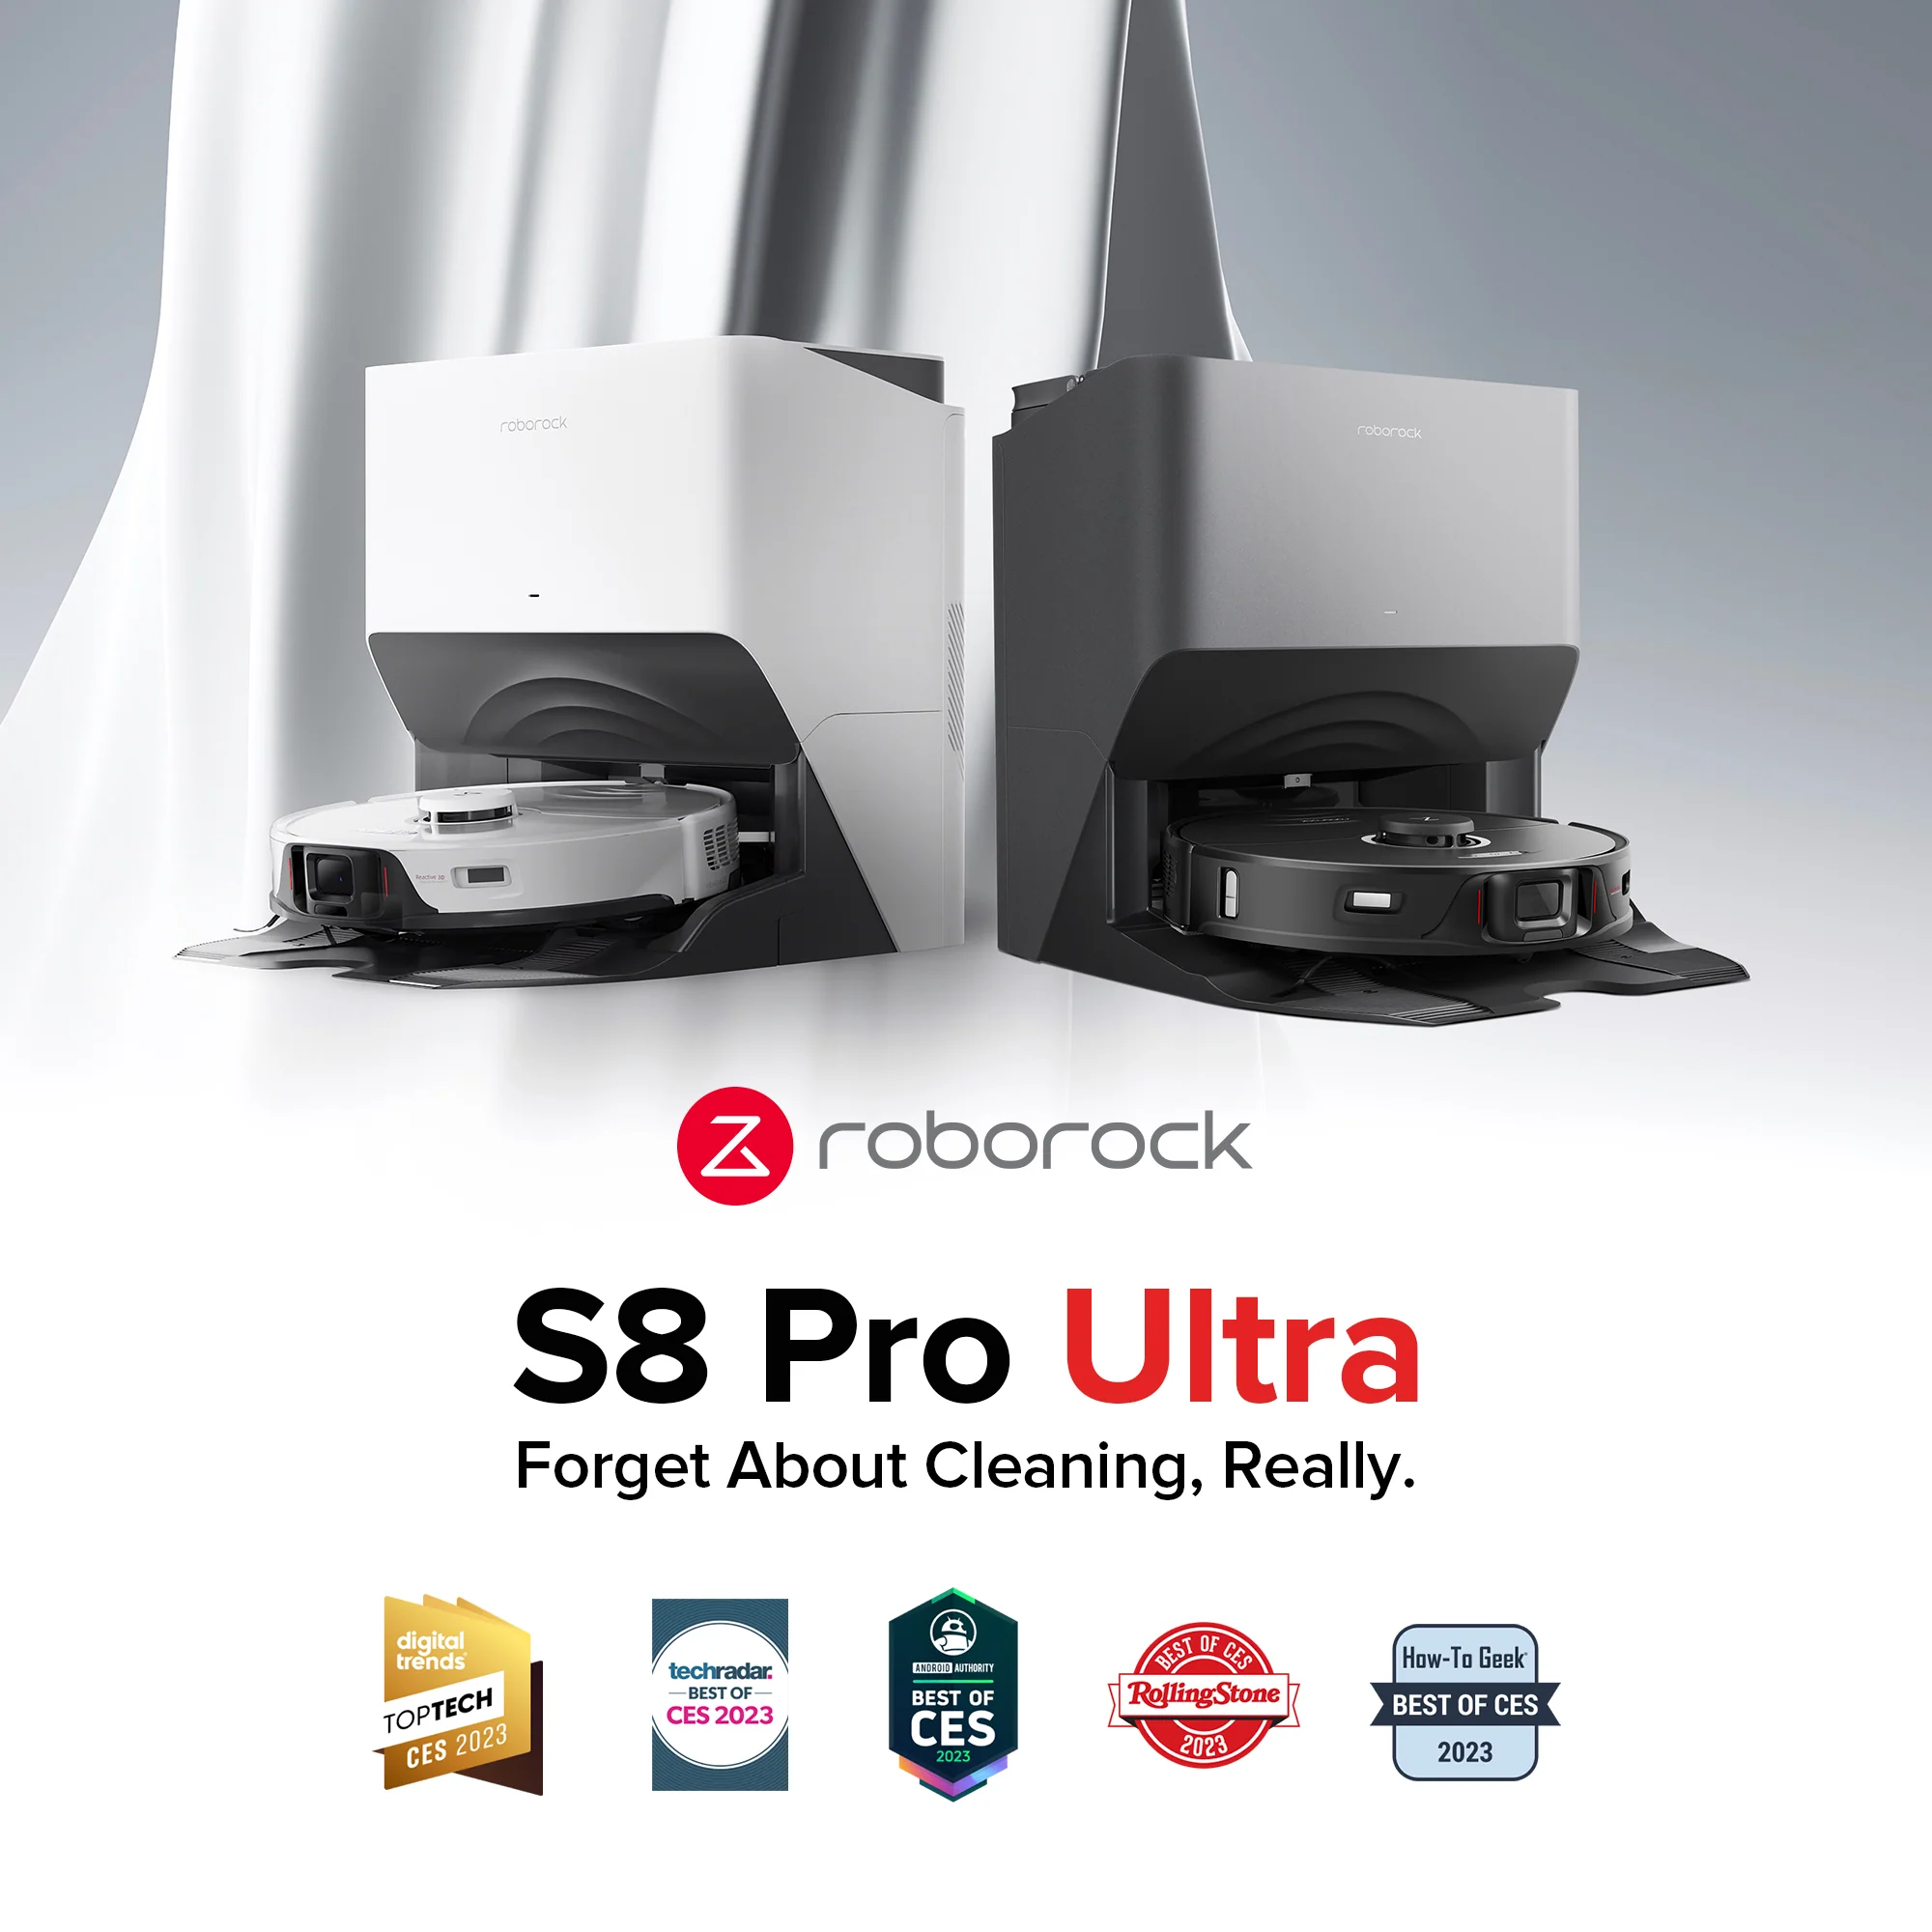 Roborock S8 Pro Ultra - Full Review & Testing 